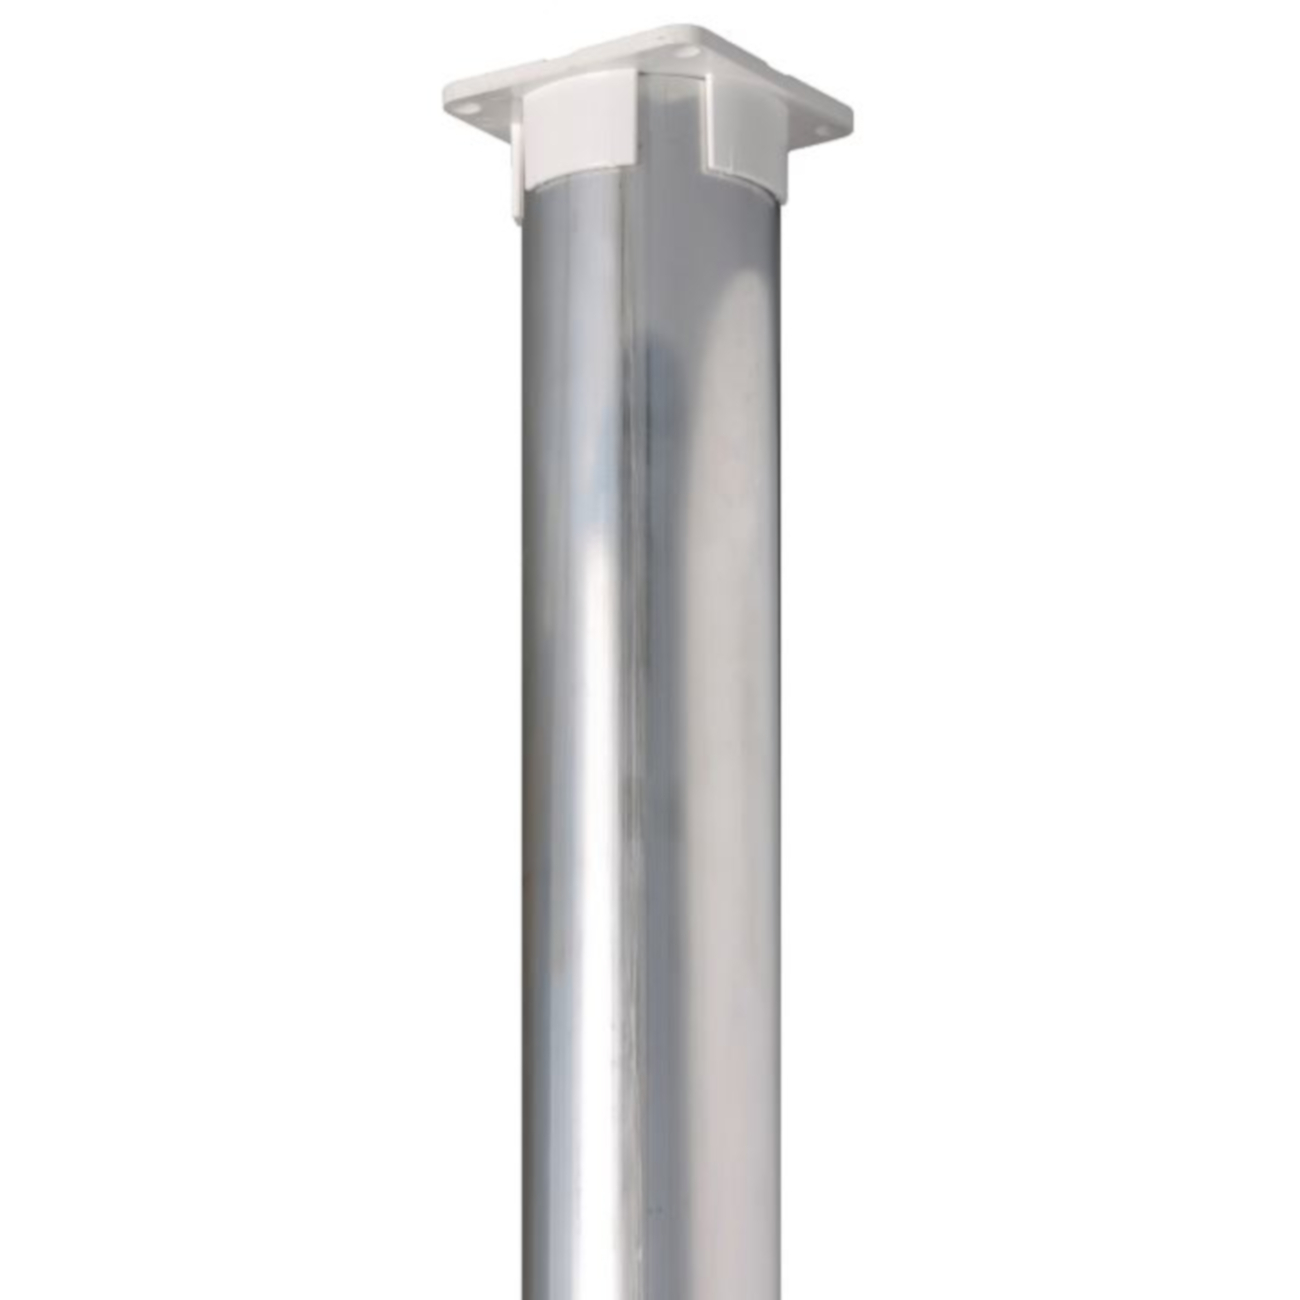 Fypon PVC Structural Post Kit